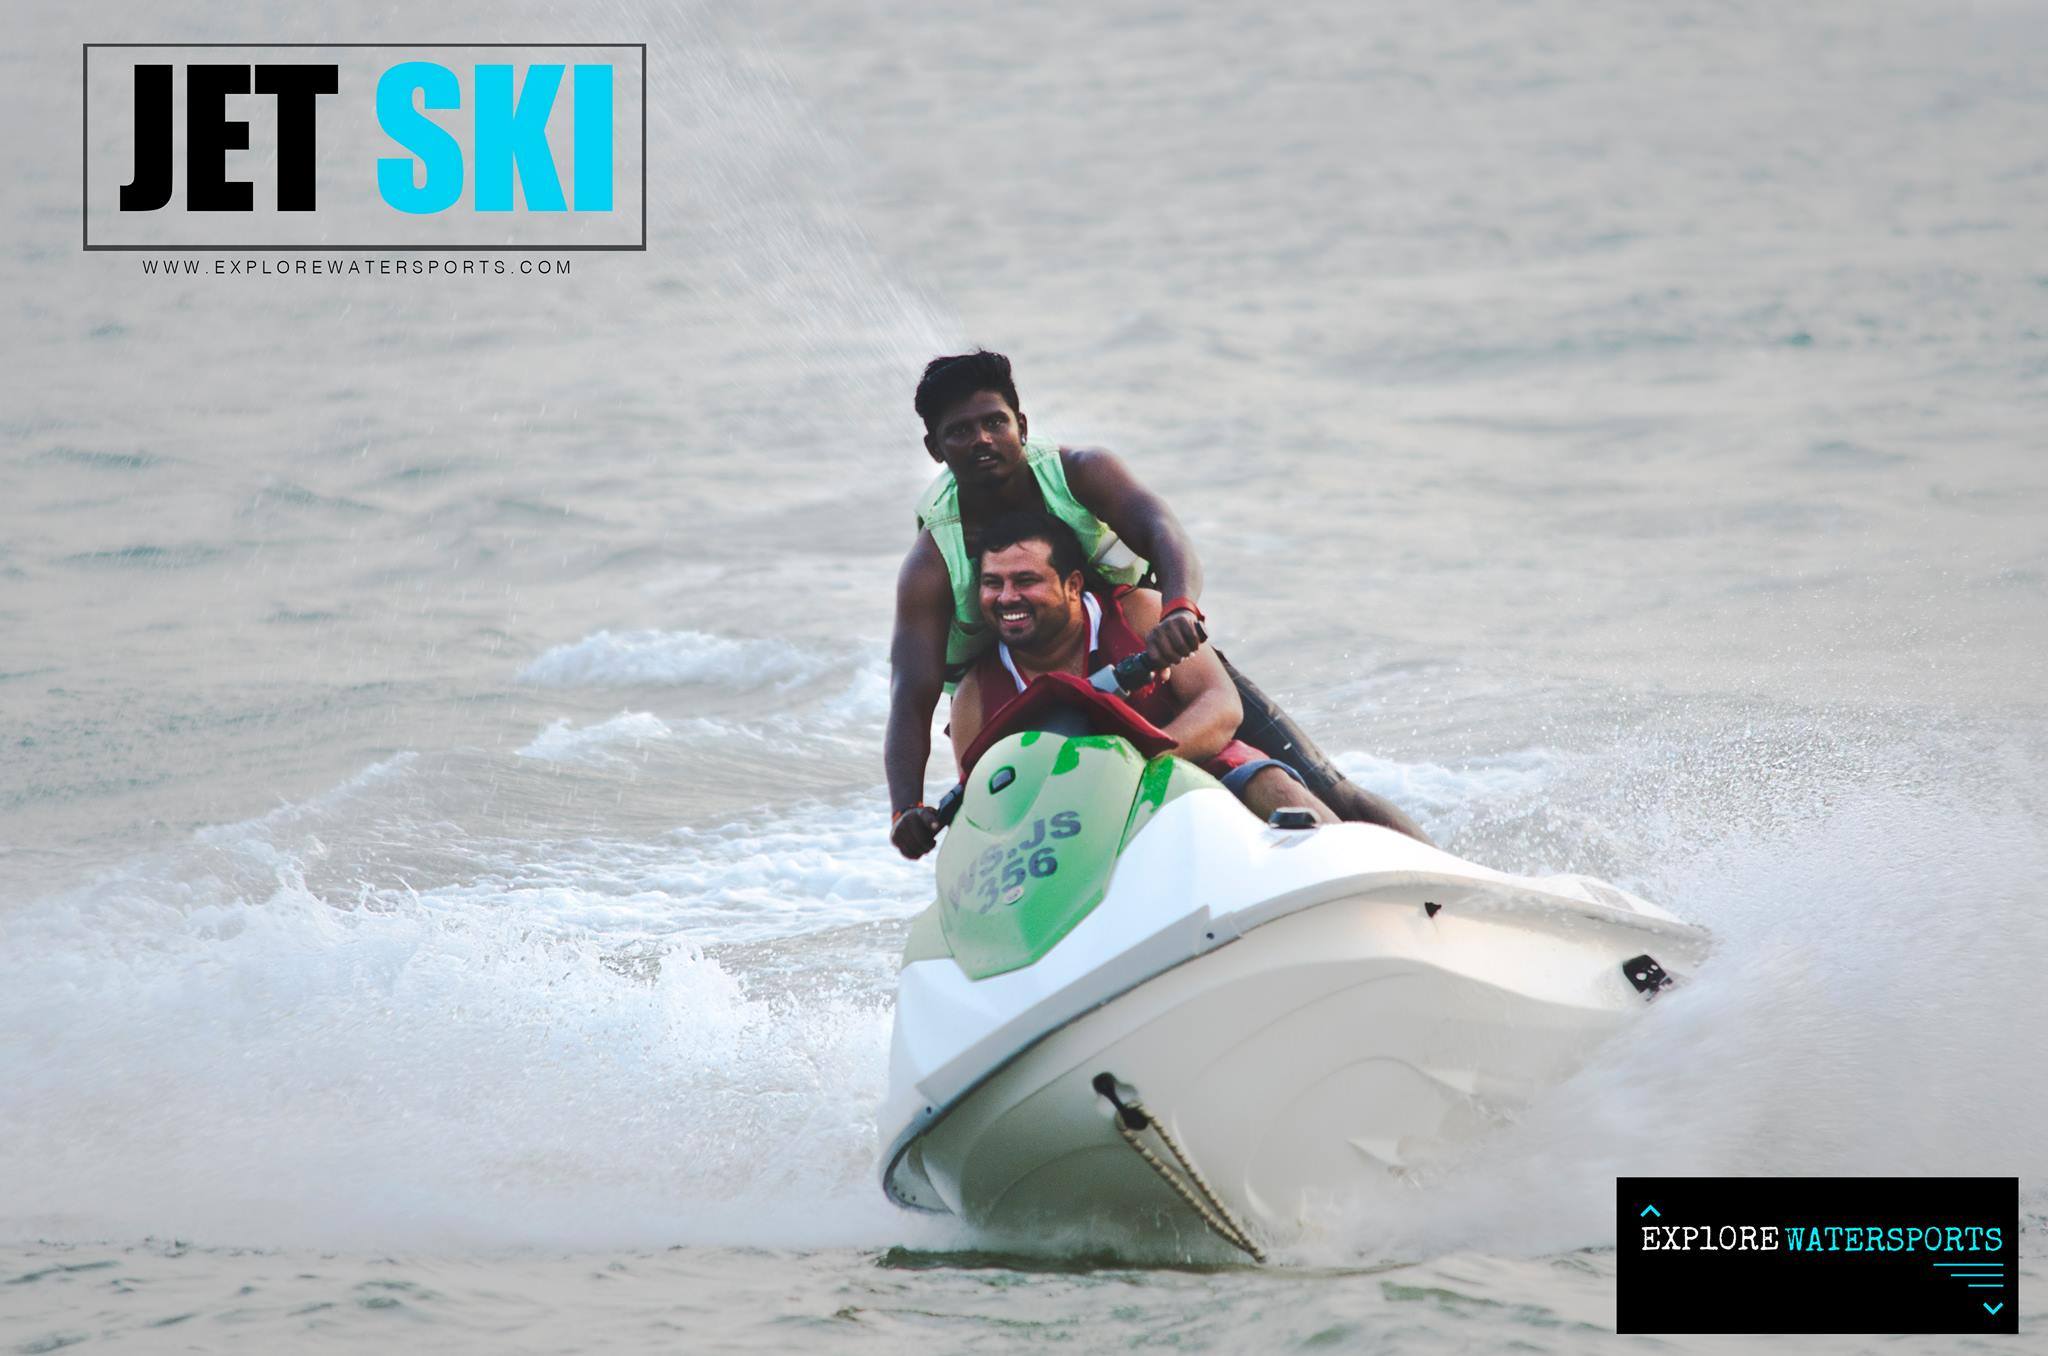 Jet Ski | Enjoy with your Family | Explore Water Sports